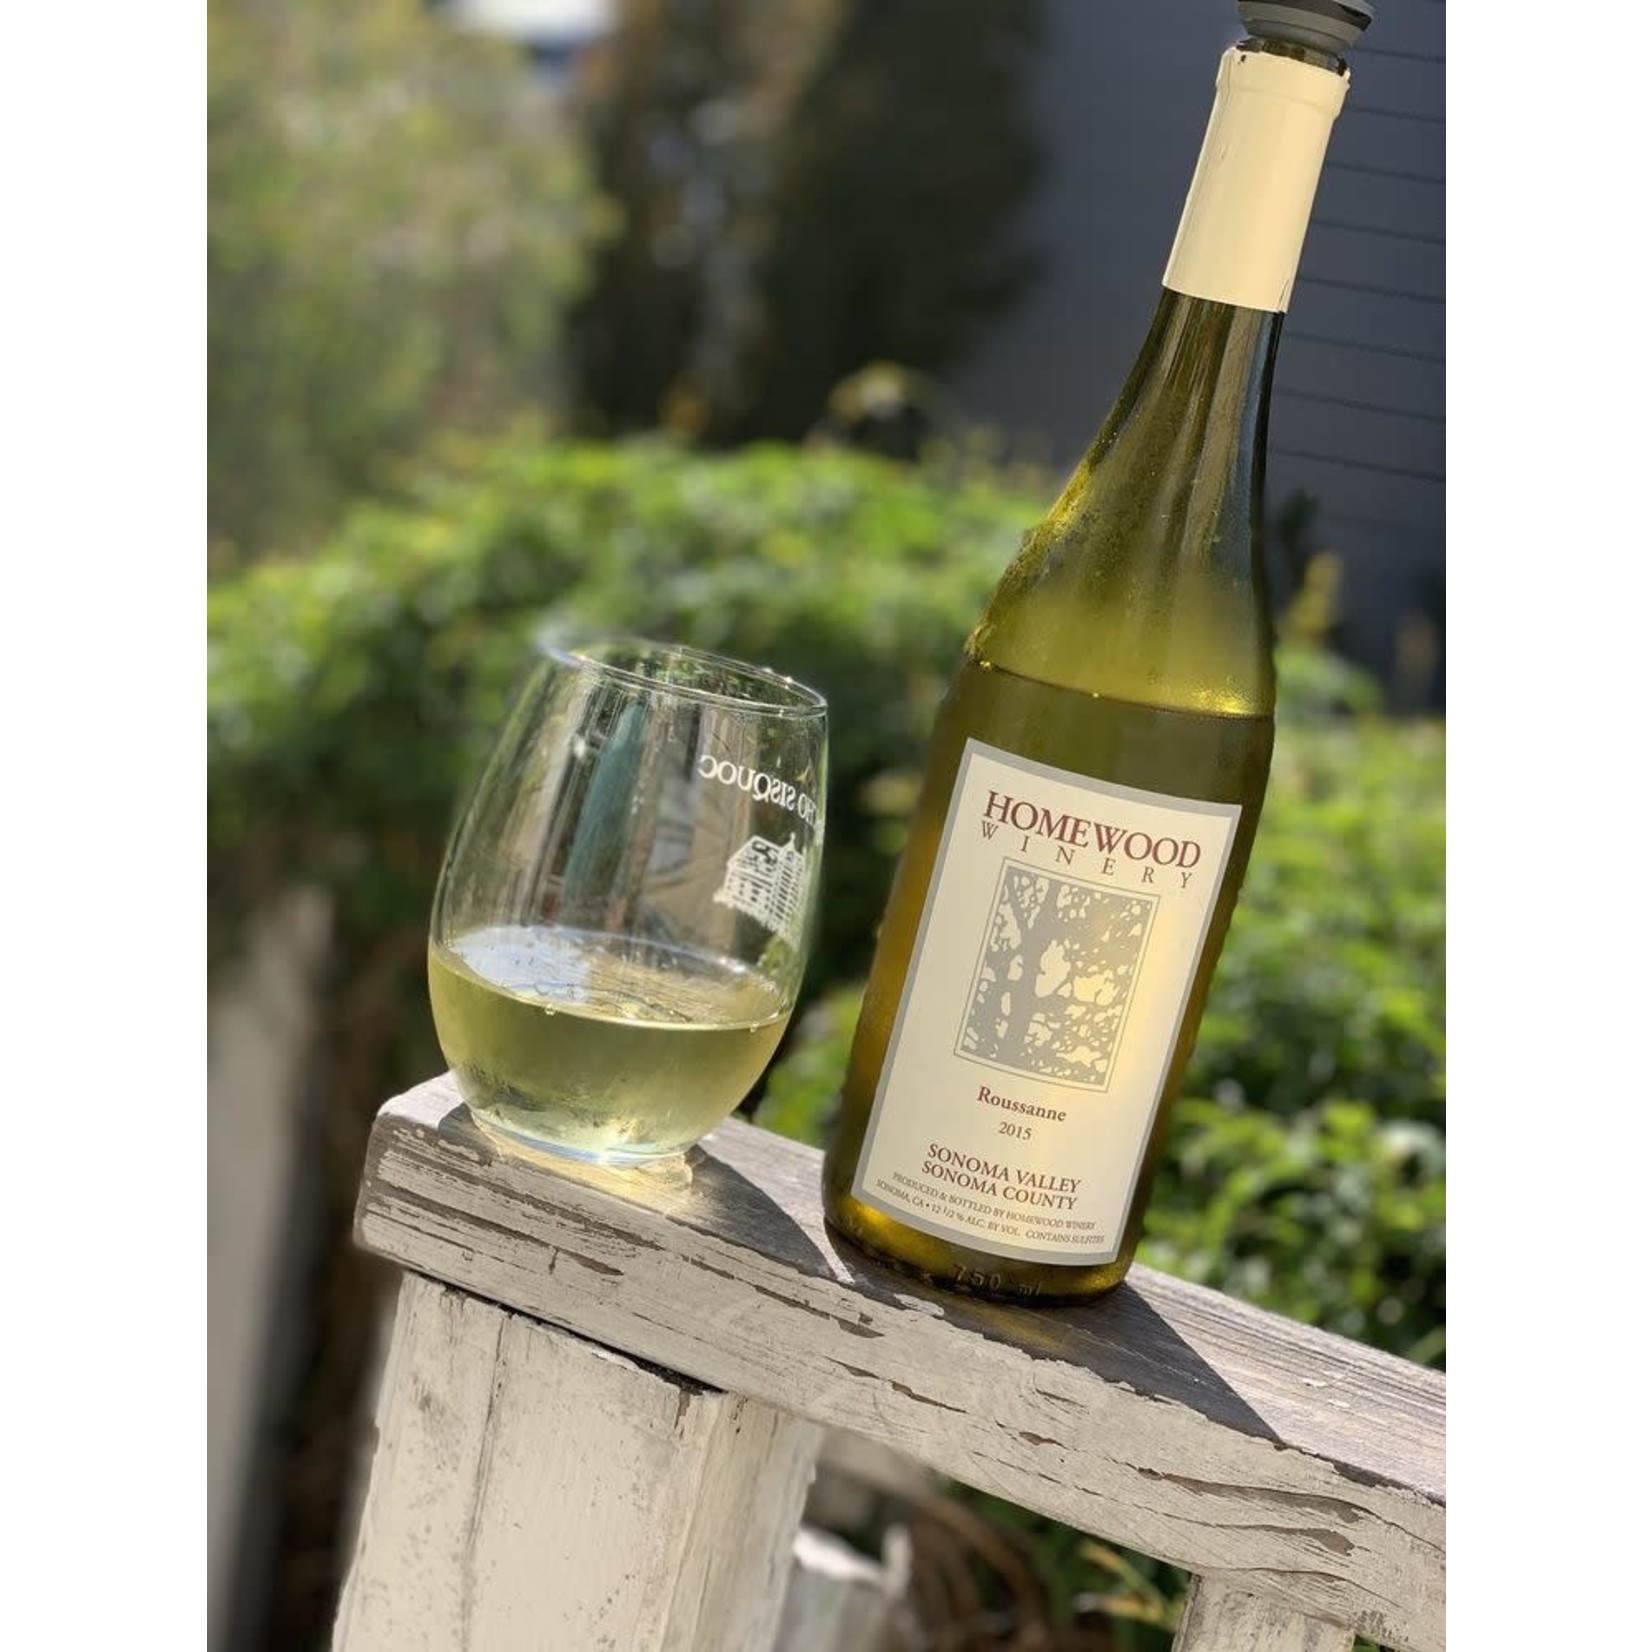 Homewood Winery Homewood Vineyard, Roussanne 2015, Sonoma Valley, Sonoma County, CA